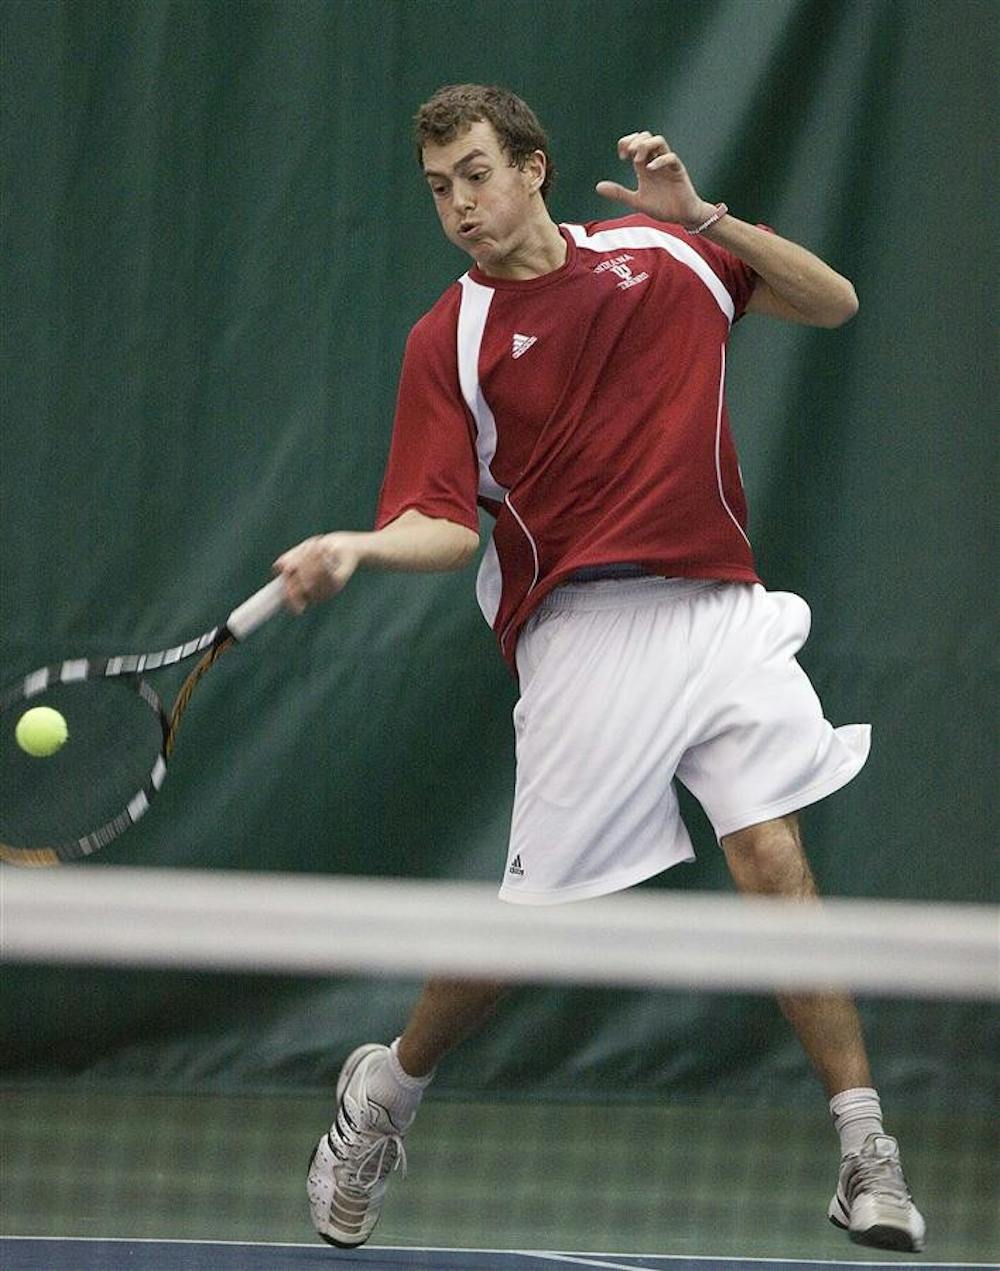 Sophomore Stephen Vogl returns a shot against Butler on Saturday at the IU Tennis Center.